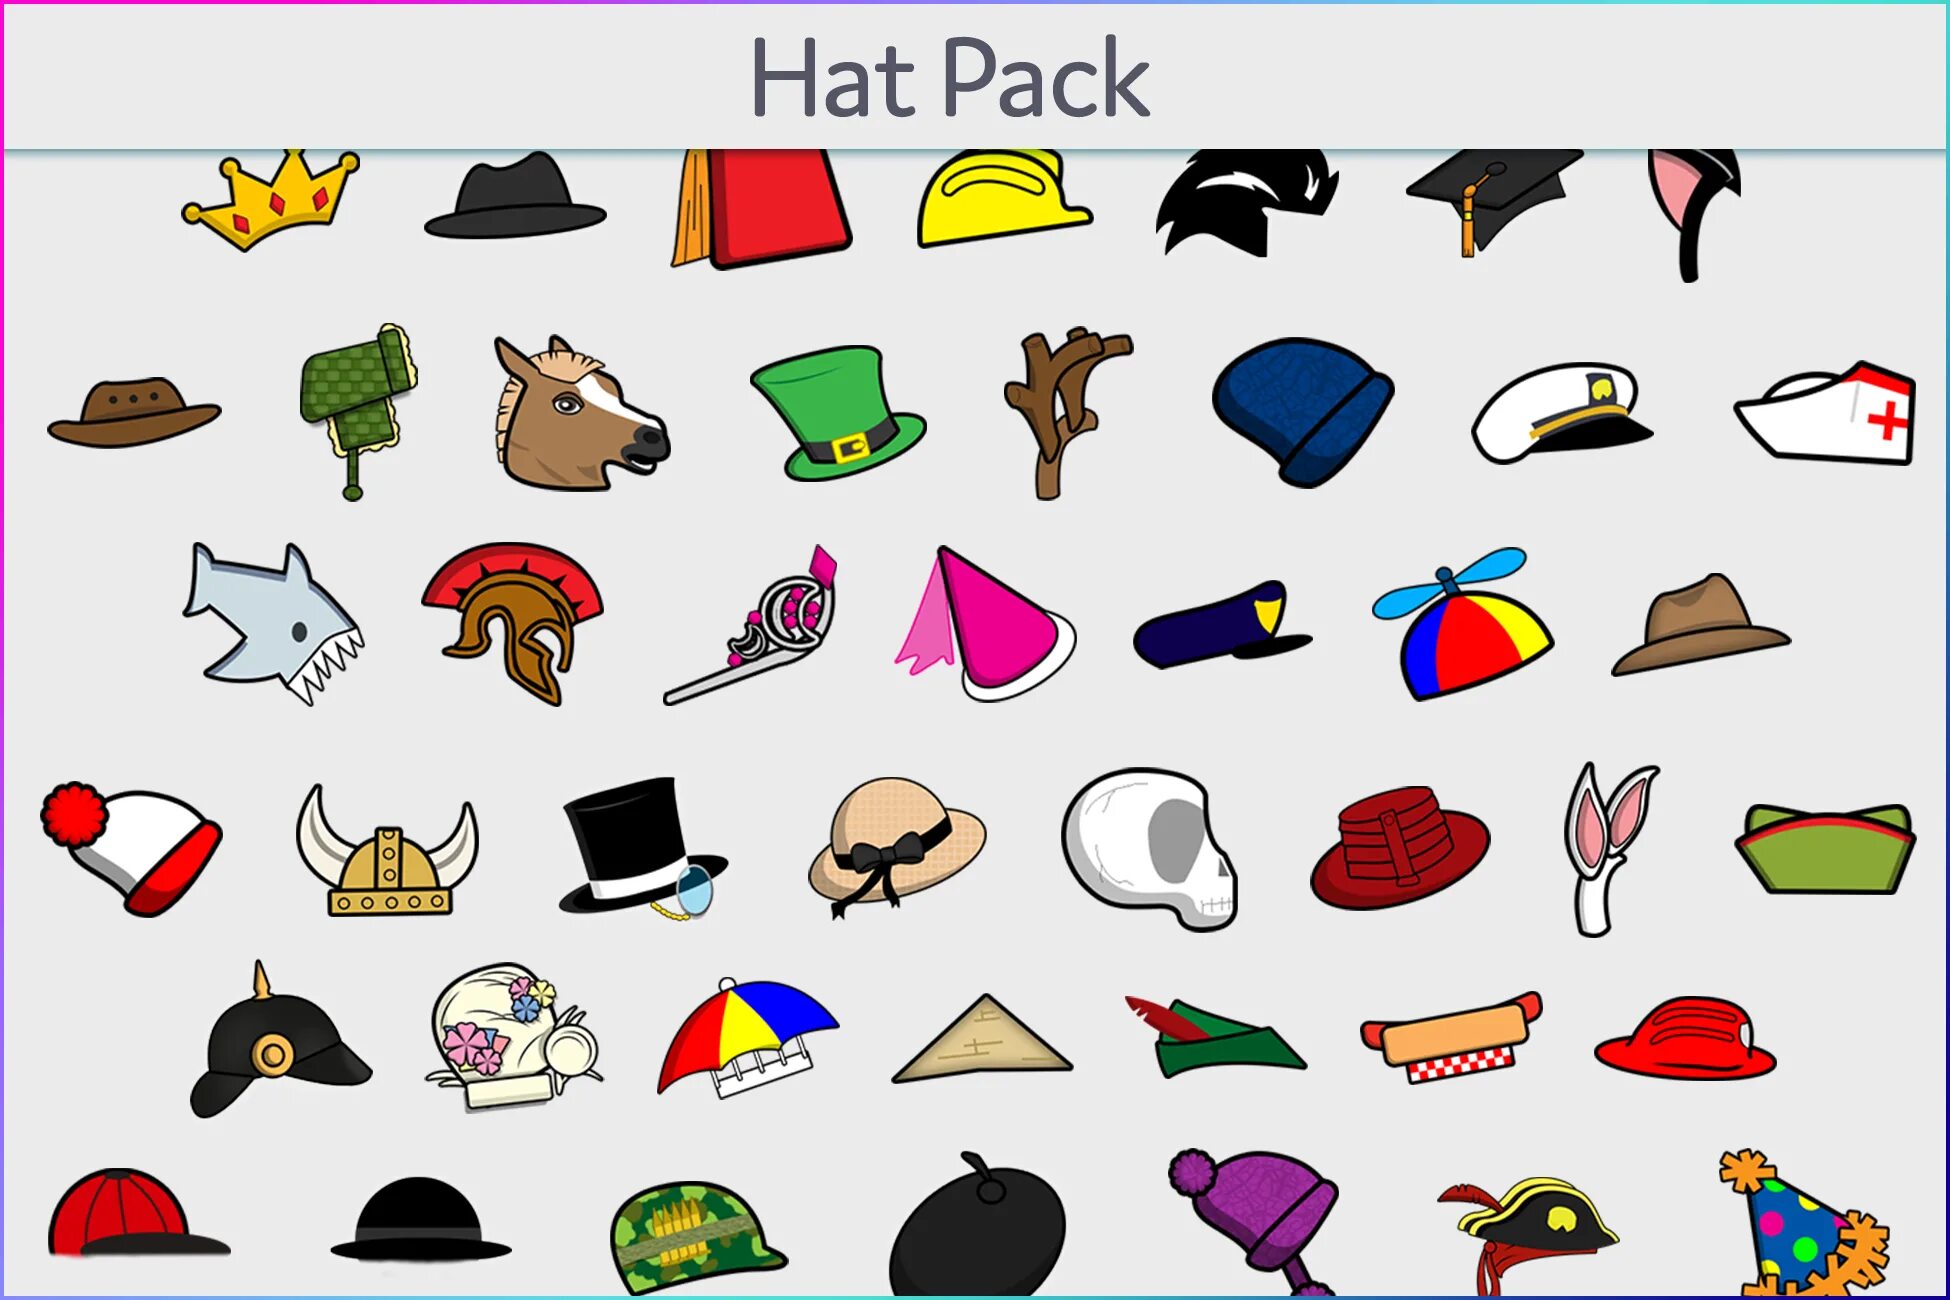 Hats pack. Шляпа 2d. Шляпа ассеты. 2d hat Pack. 2d hat Art.